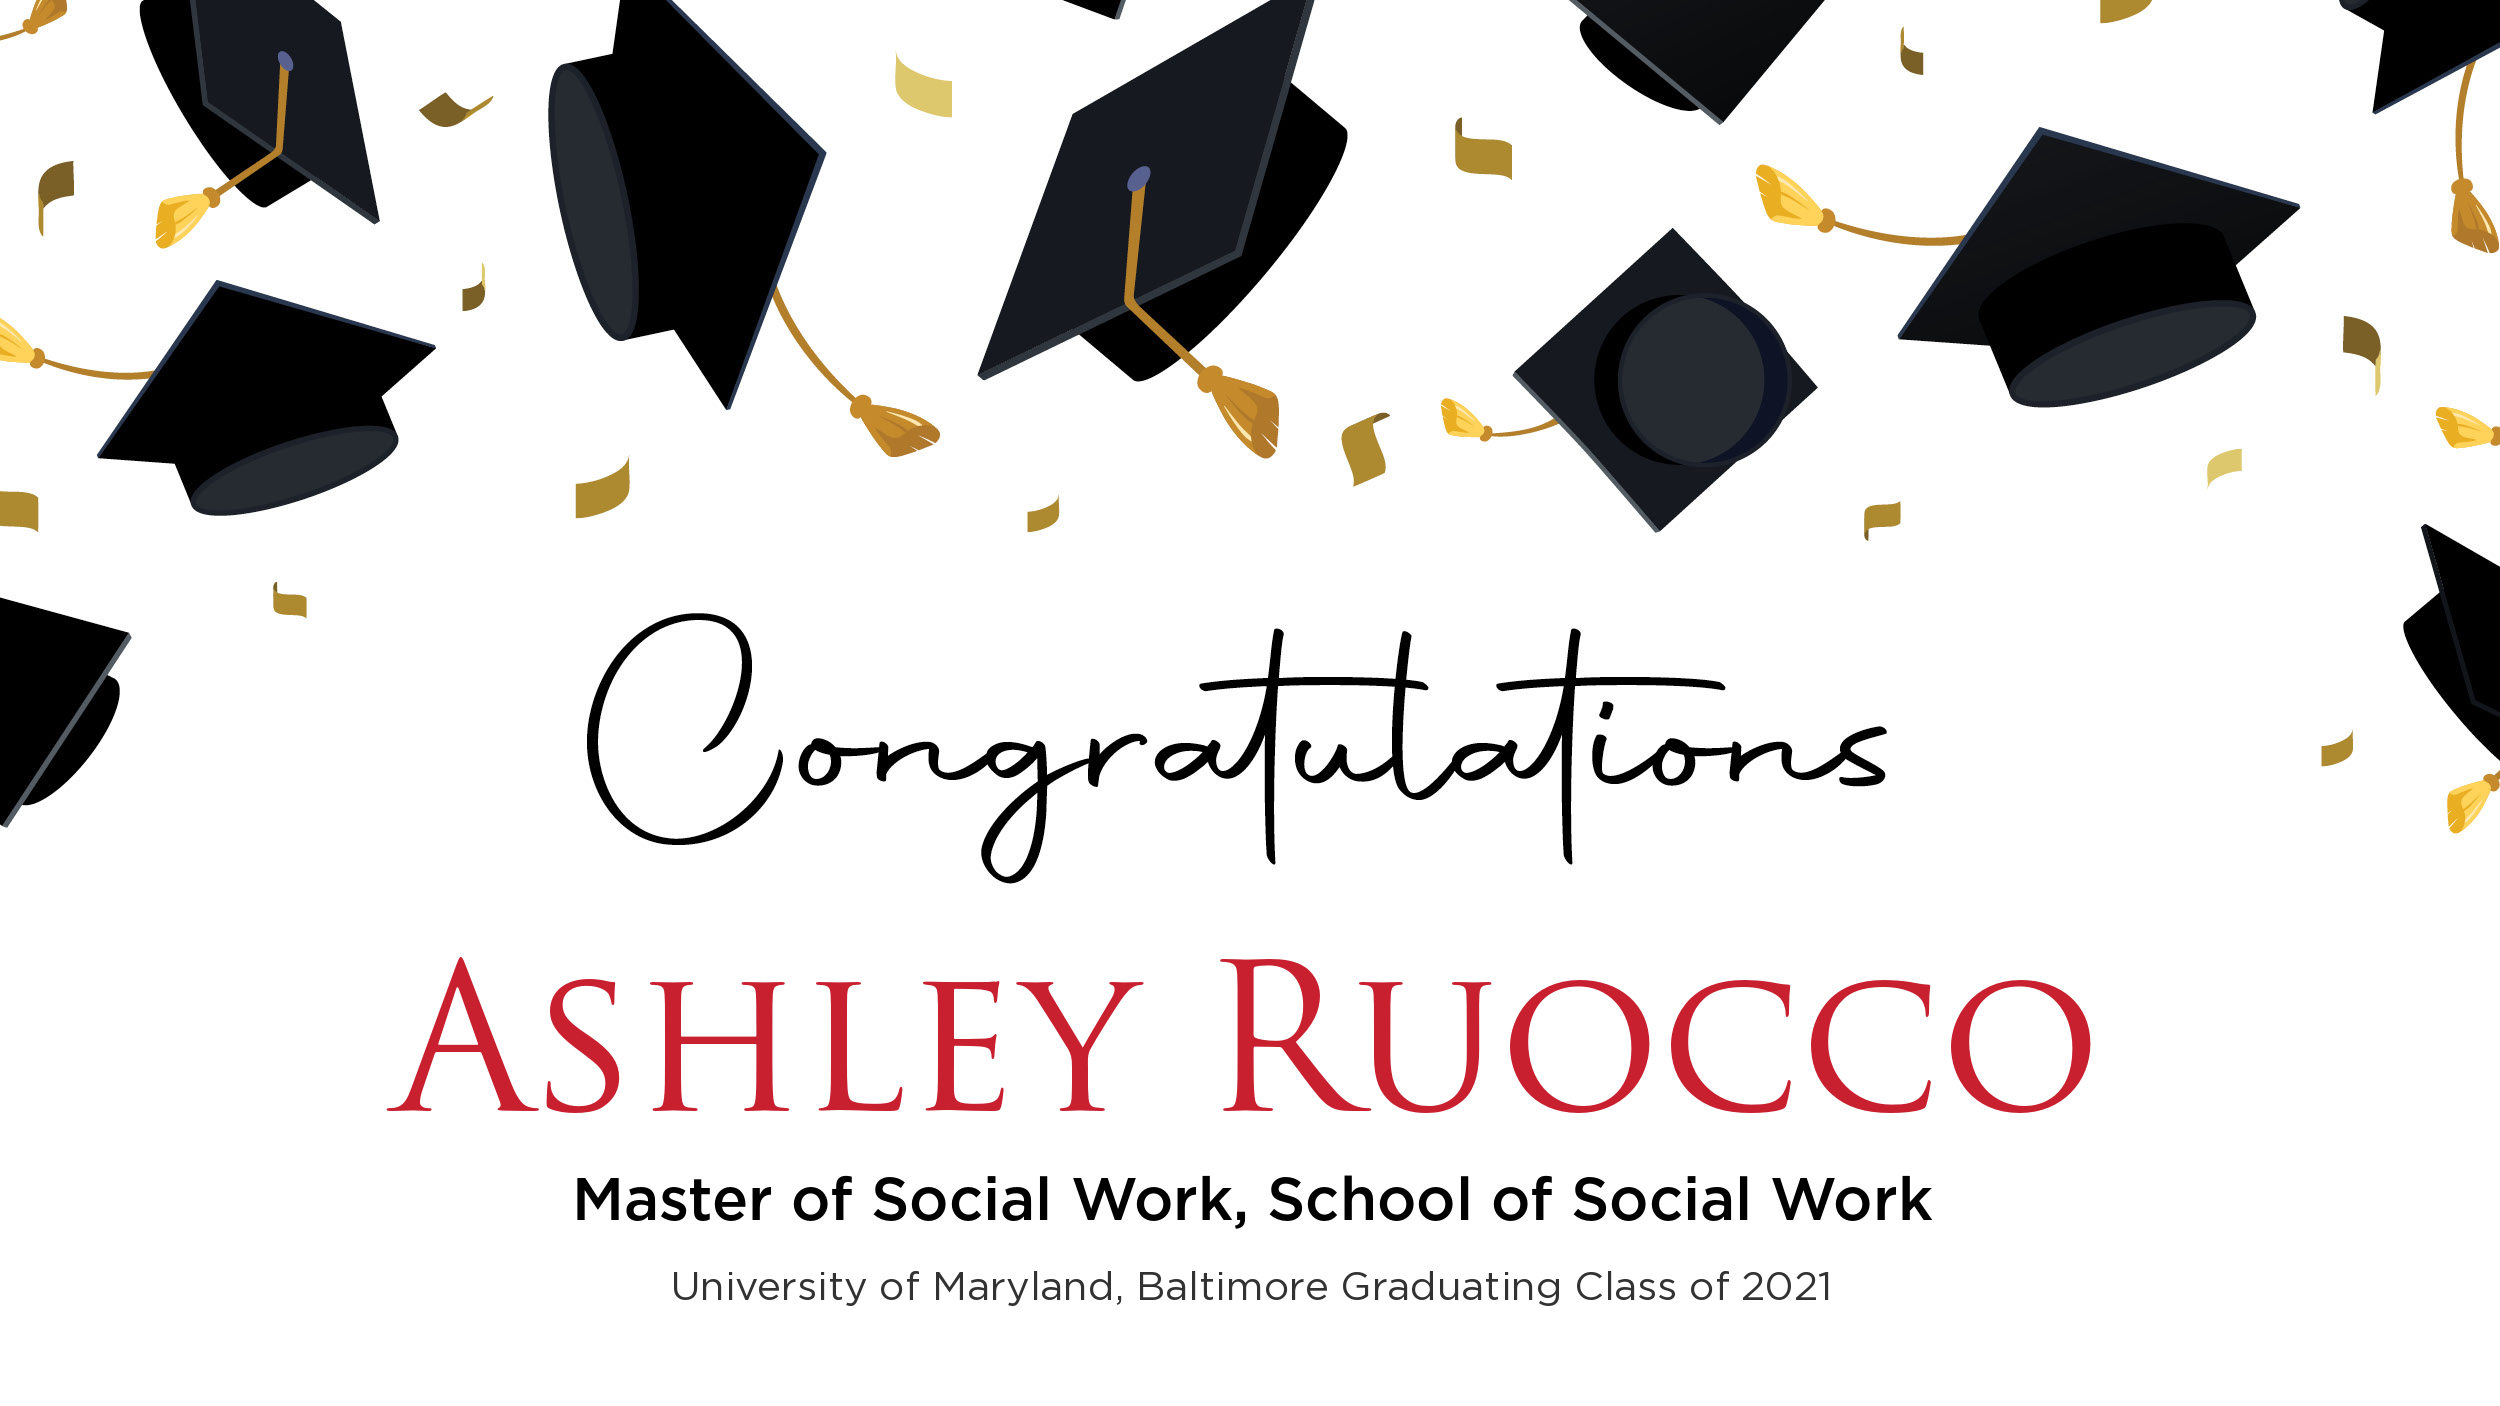 Congratulations Ashley Ruocco, Master of Social Work